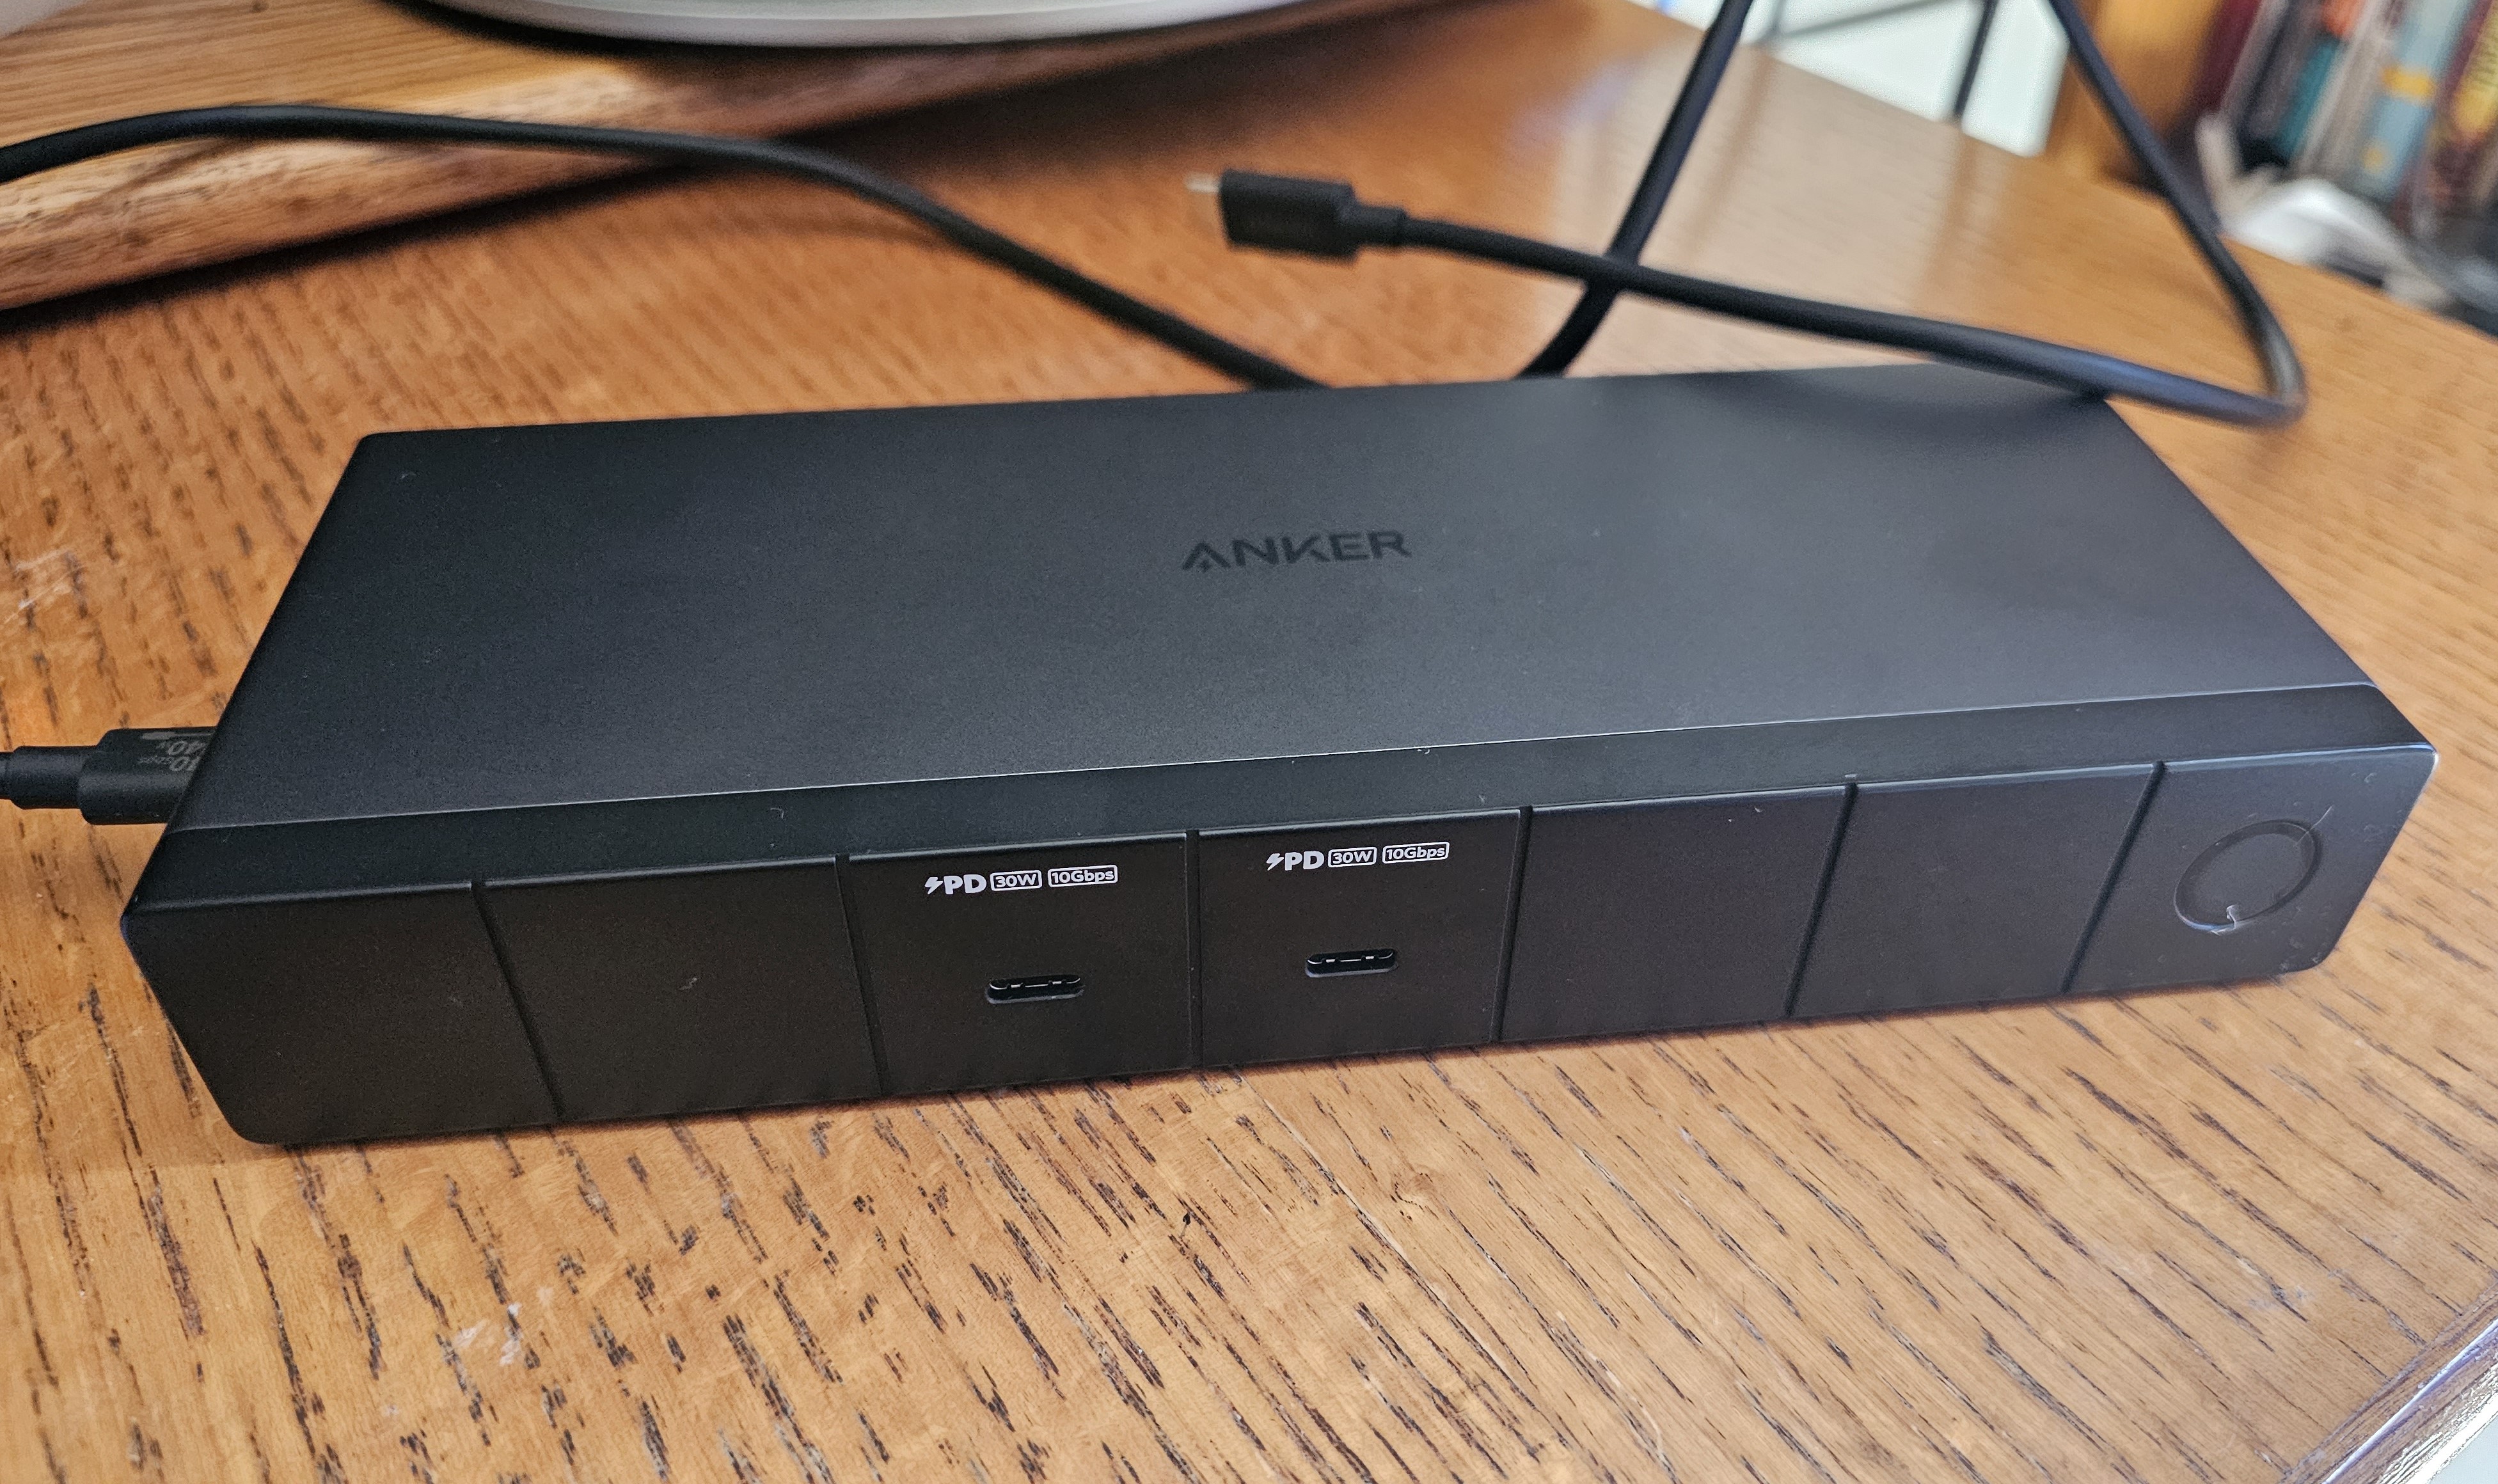 Anker 568 USB-C Docking Station - Best USB4 dock for charging and displays